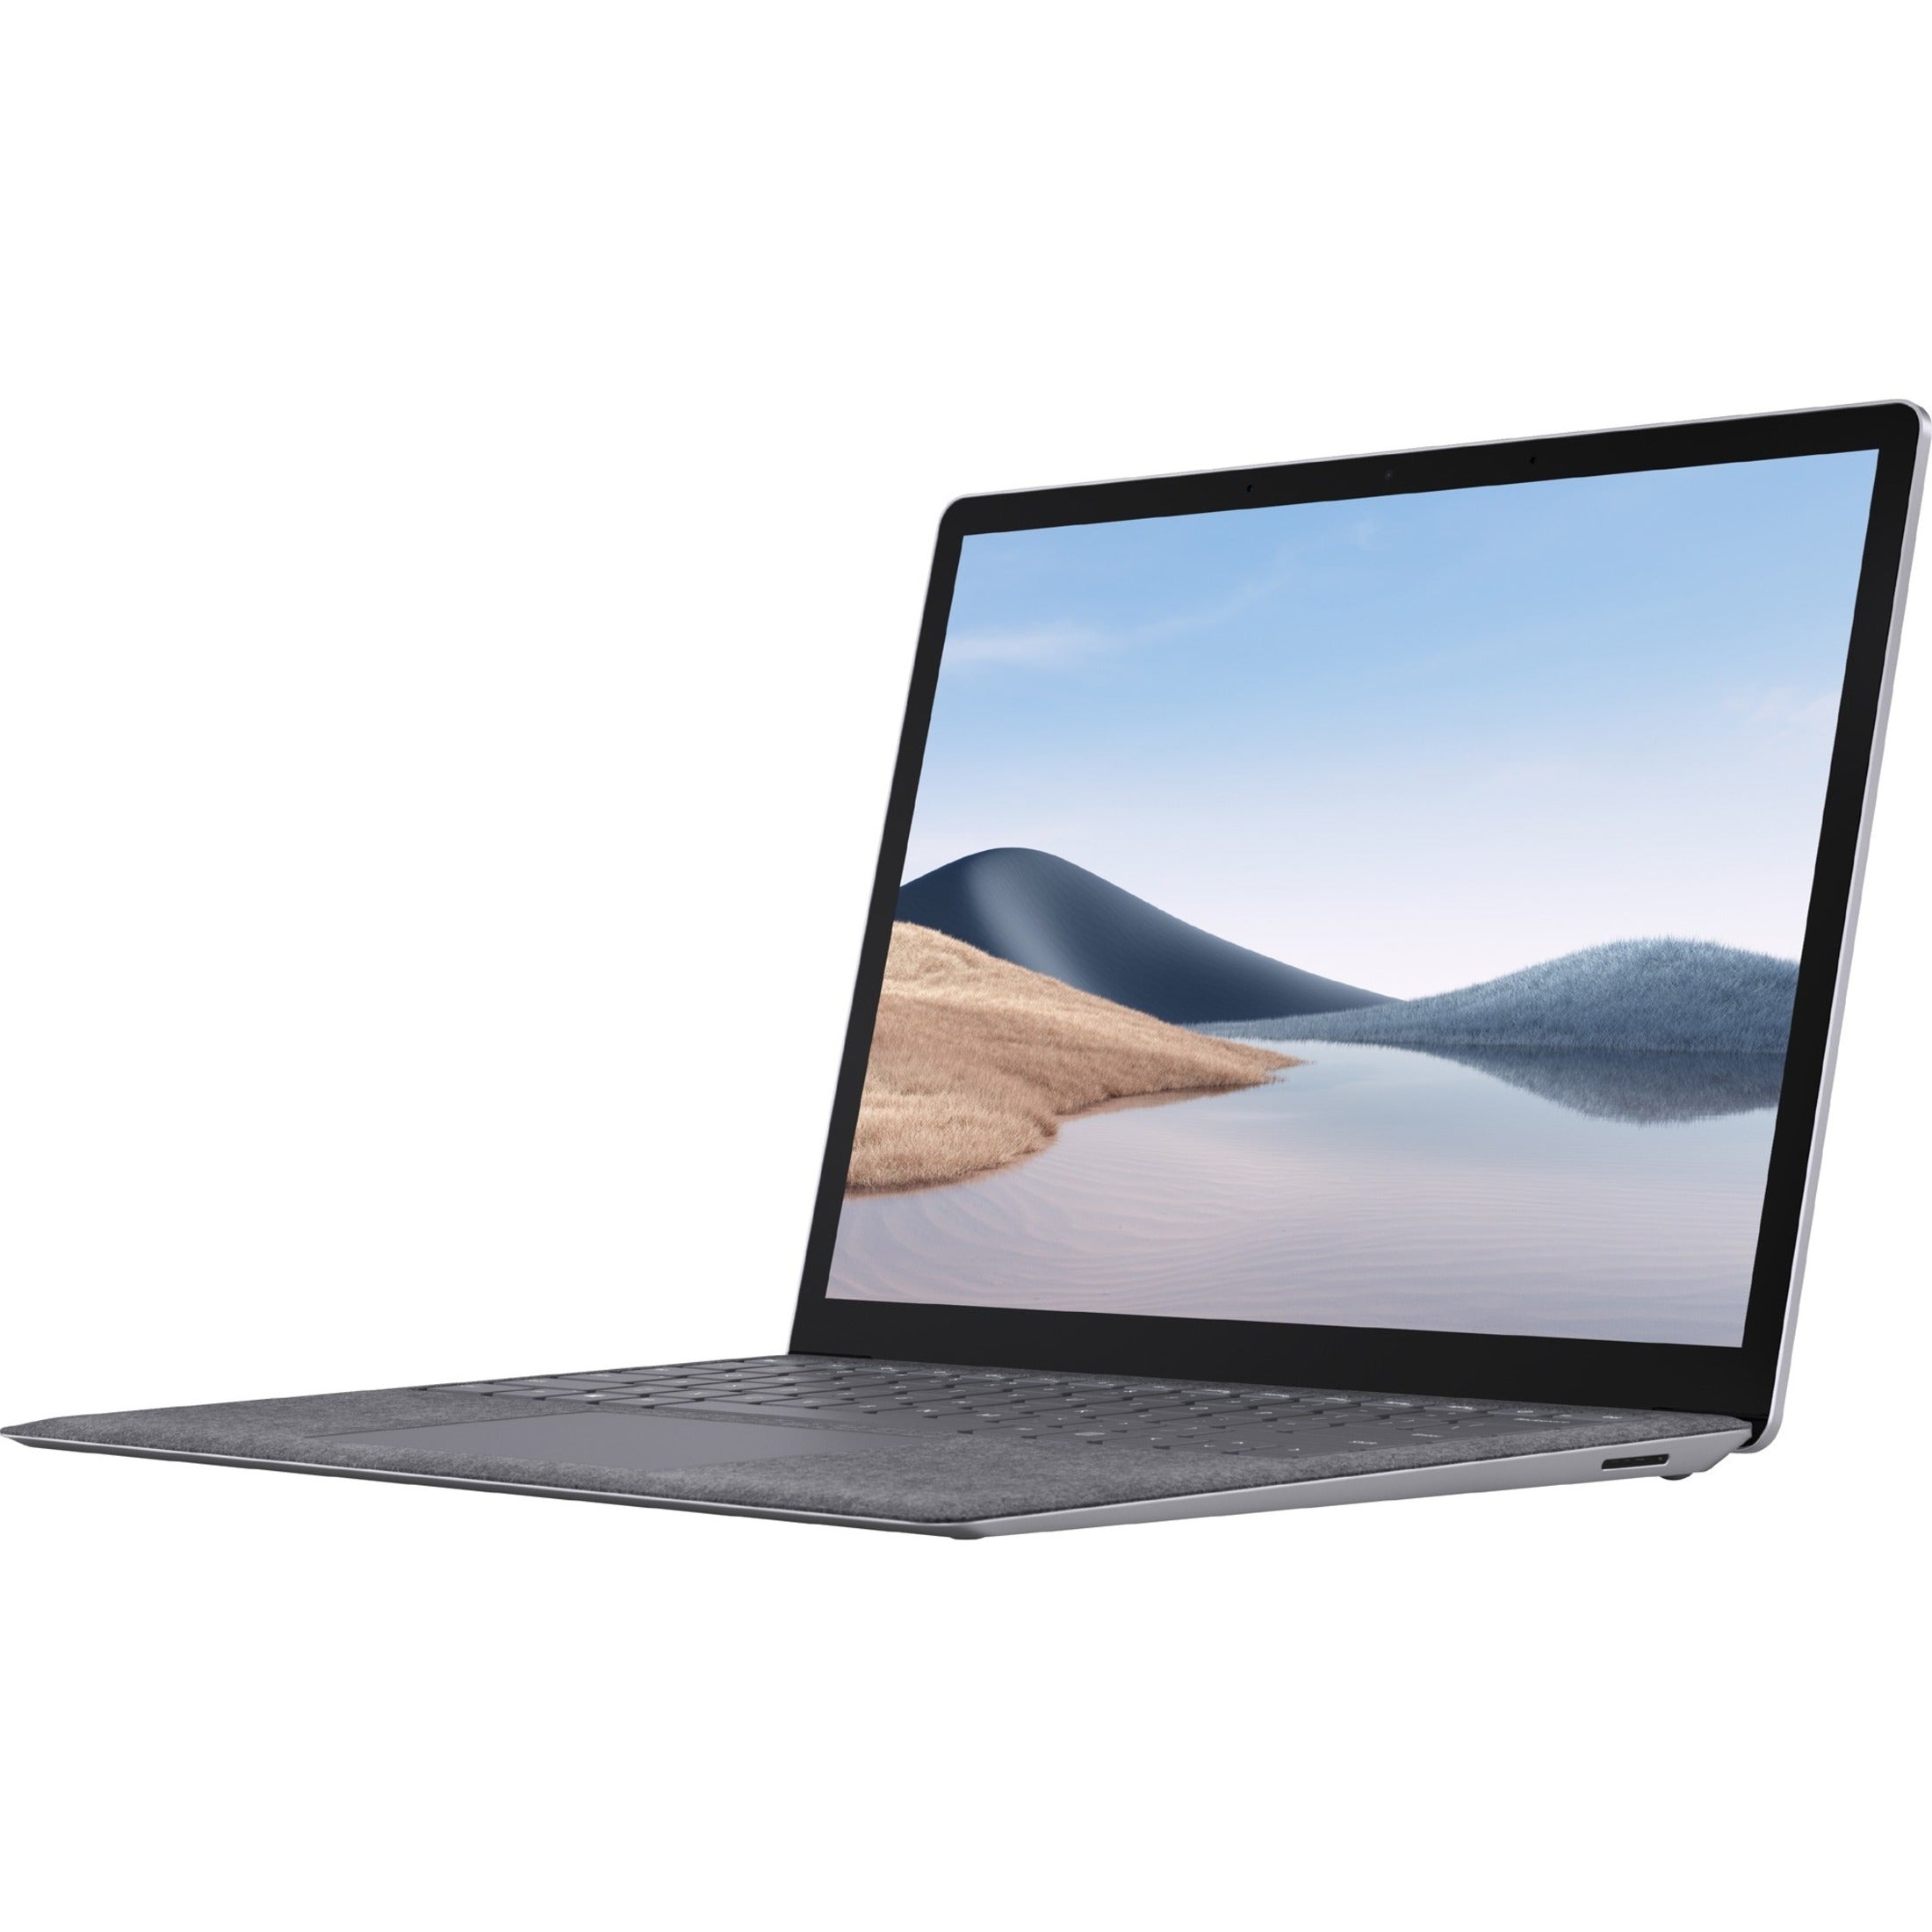 Microsoft 5F1-00035 Surface Laptop 4 Notebook, 13.5 Touchscreen, Core i7, 16GB RAM, 512GB SSD, Windows 10